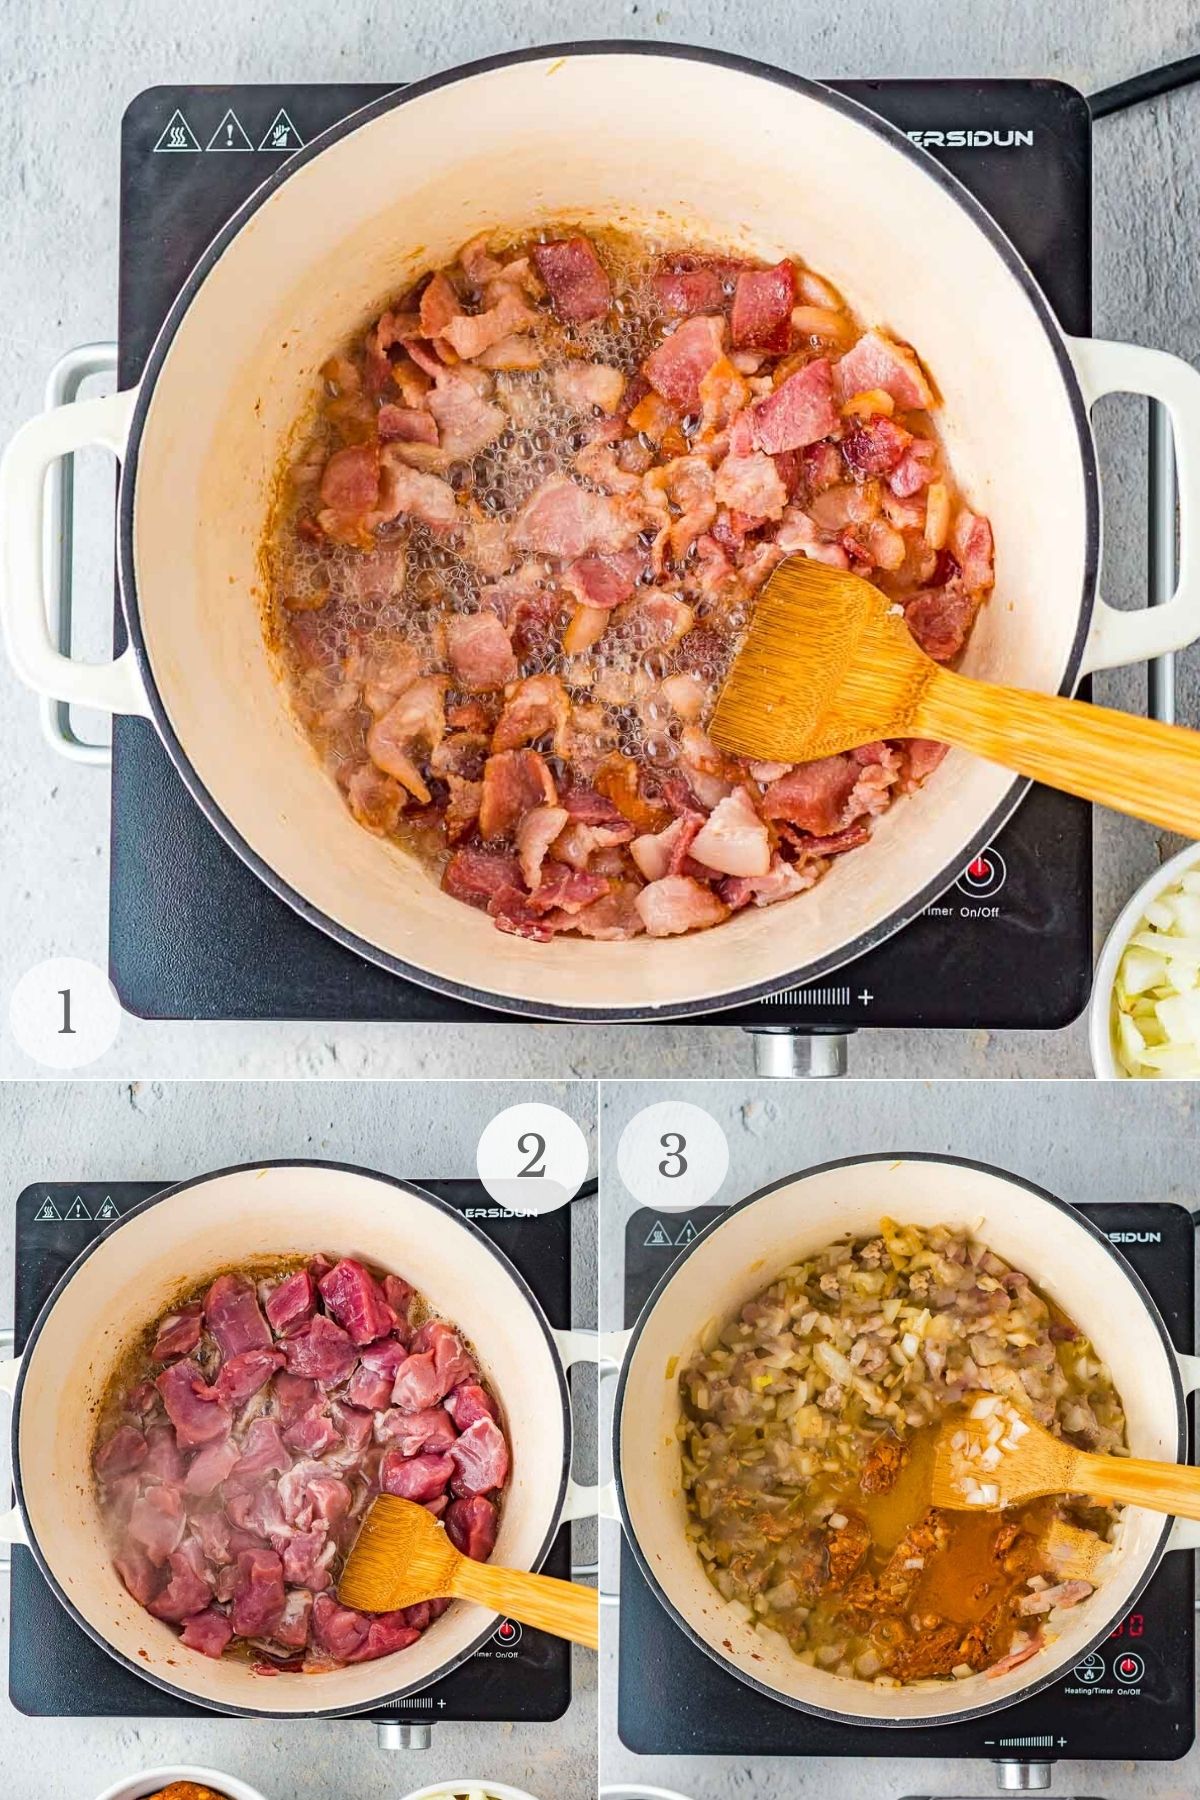 pork chili recipe steps 1-3